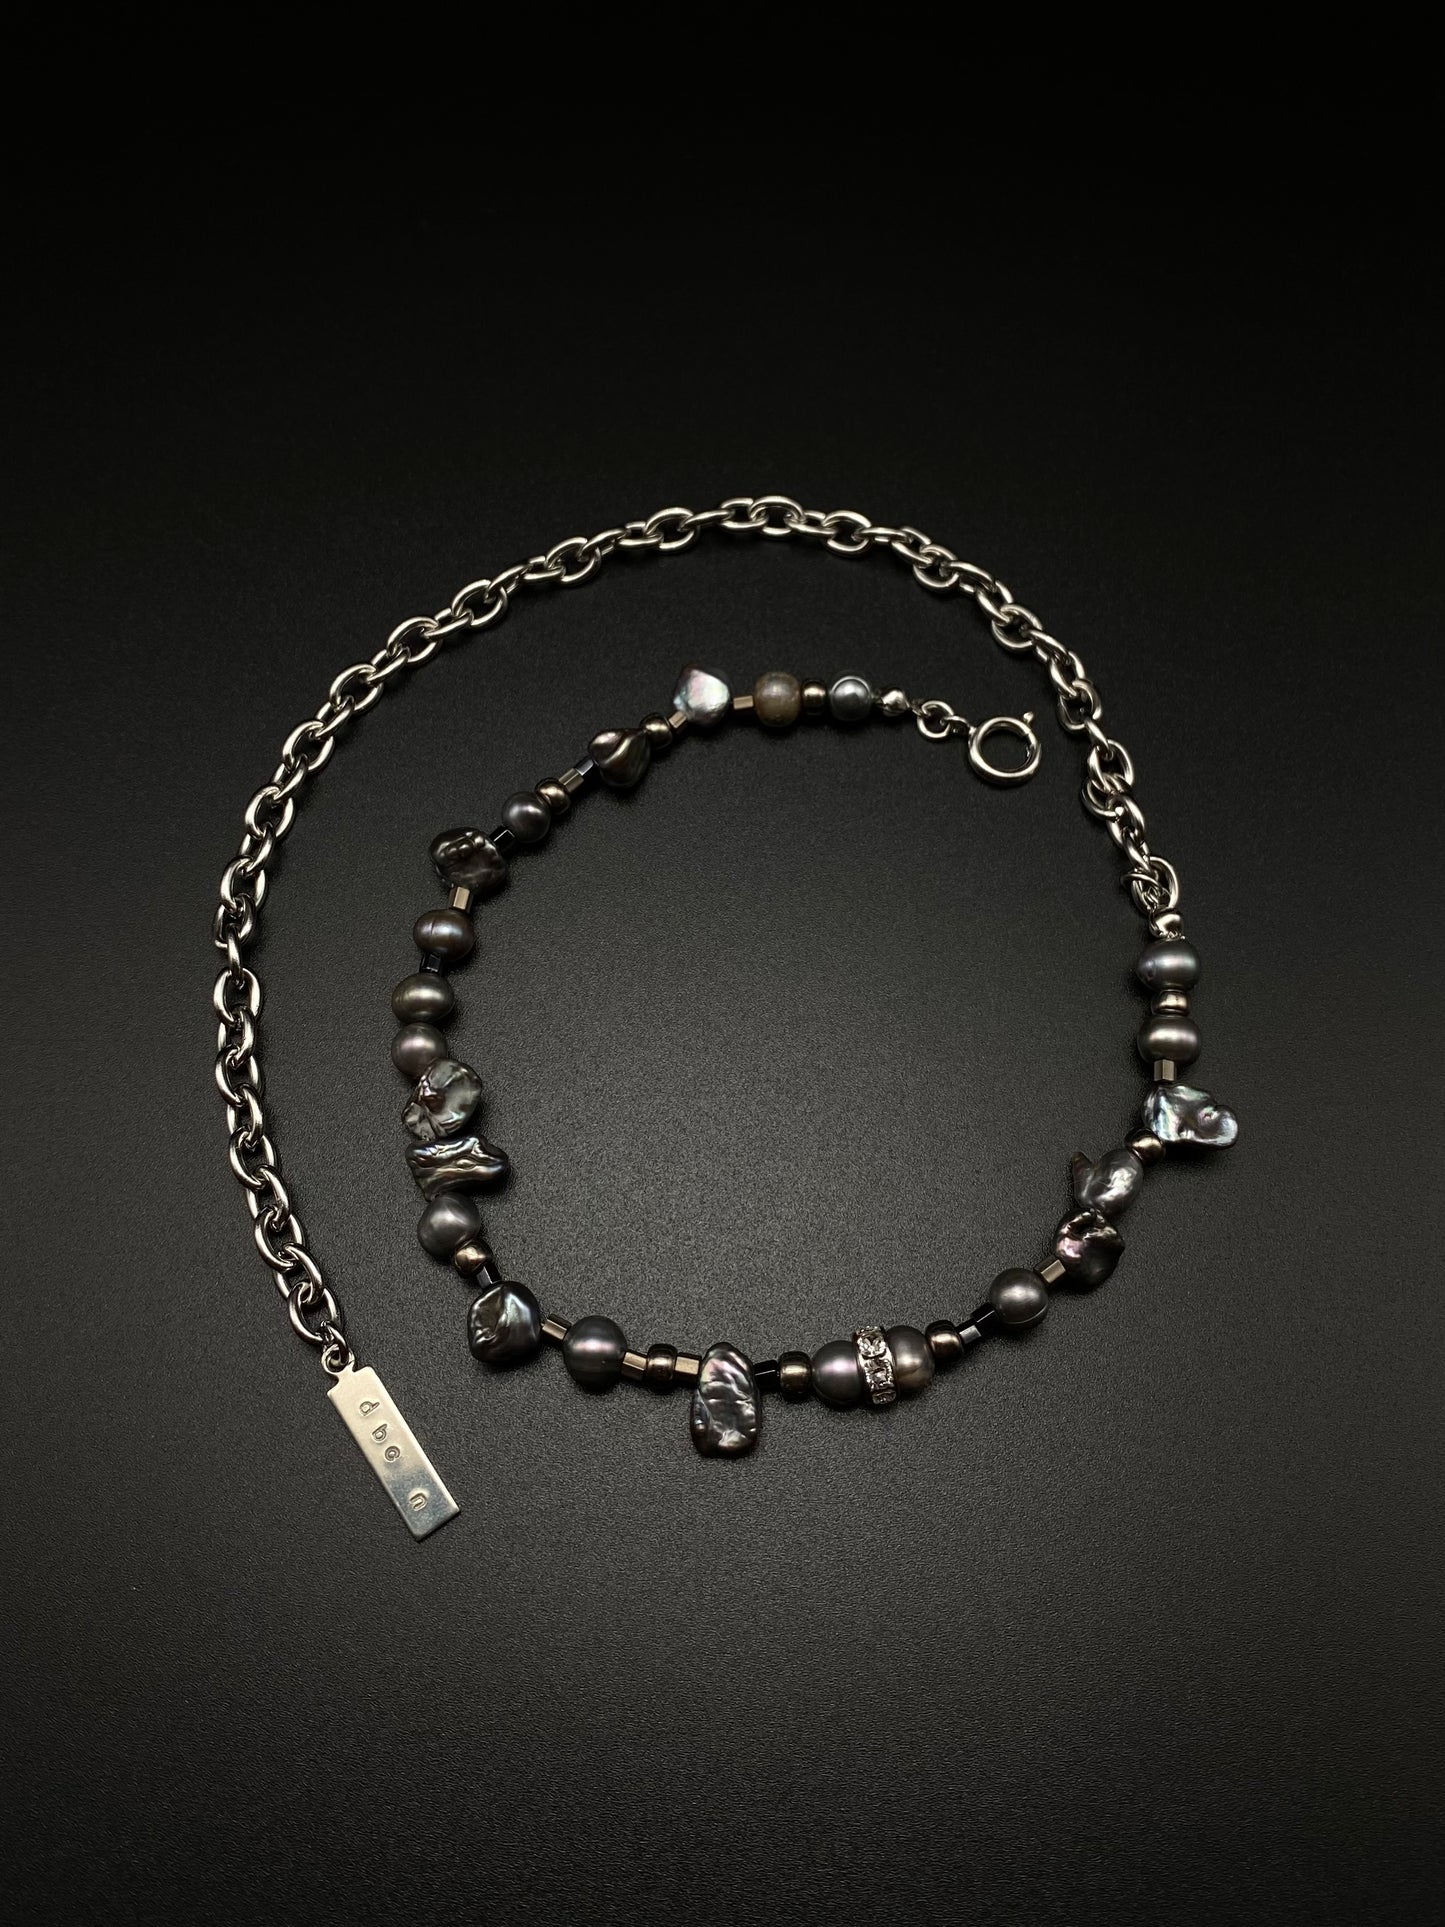 1010 necklace - combination